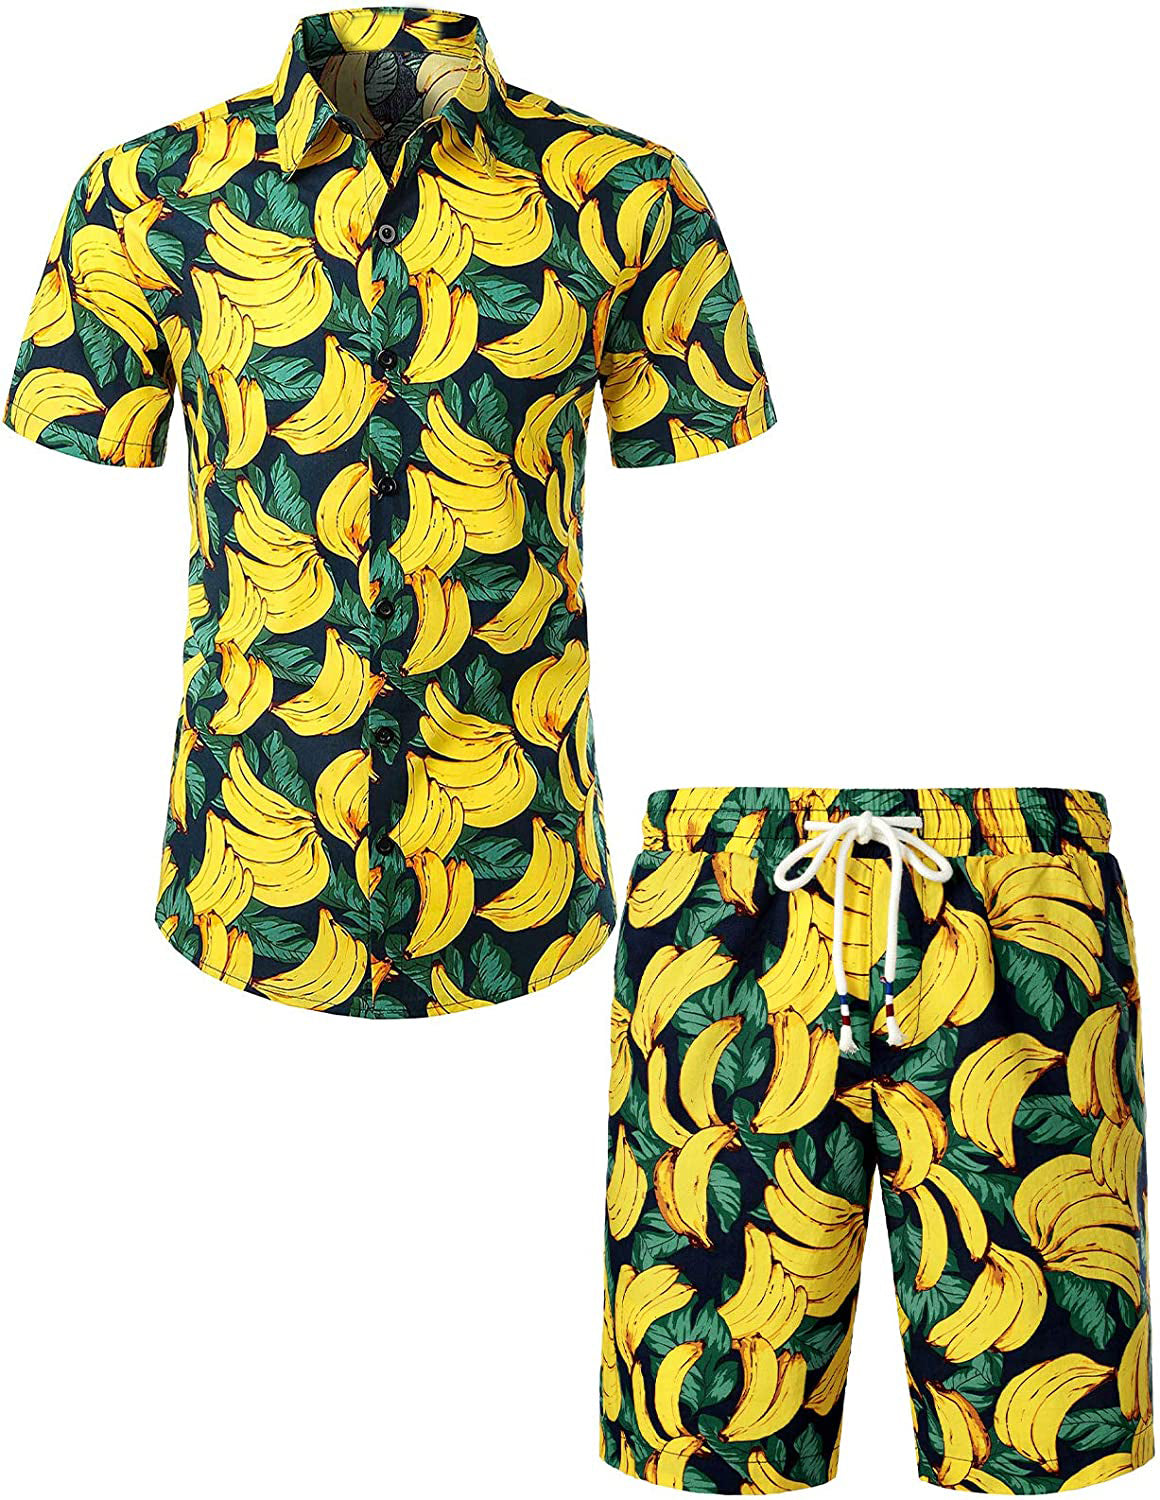 Men's Banana Print Cotton Summer Suit Hawaiian Tropical Fruit Shirt and Shorts Set